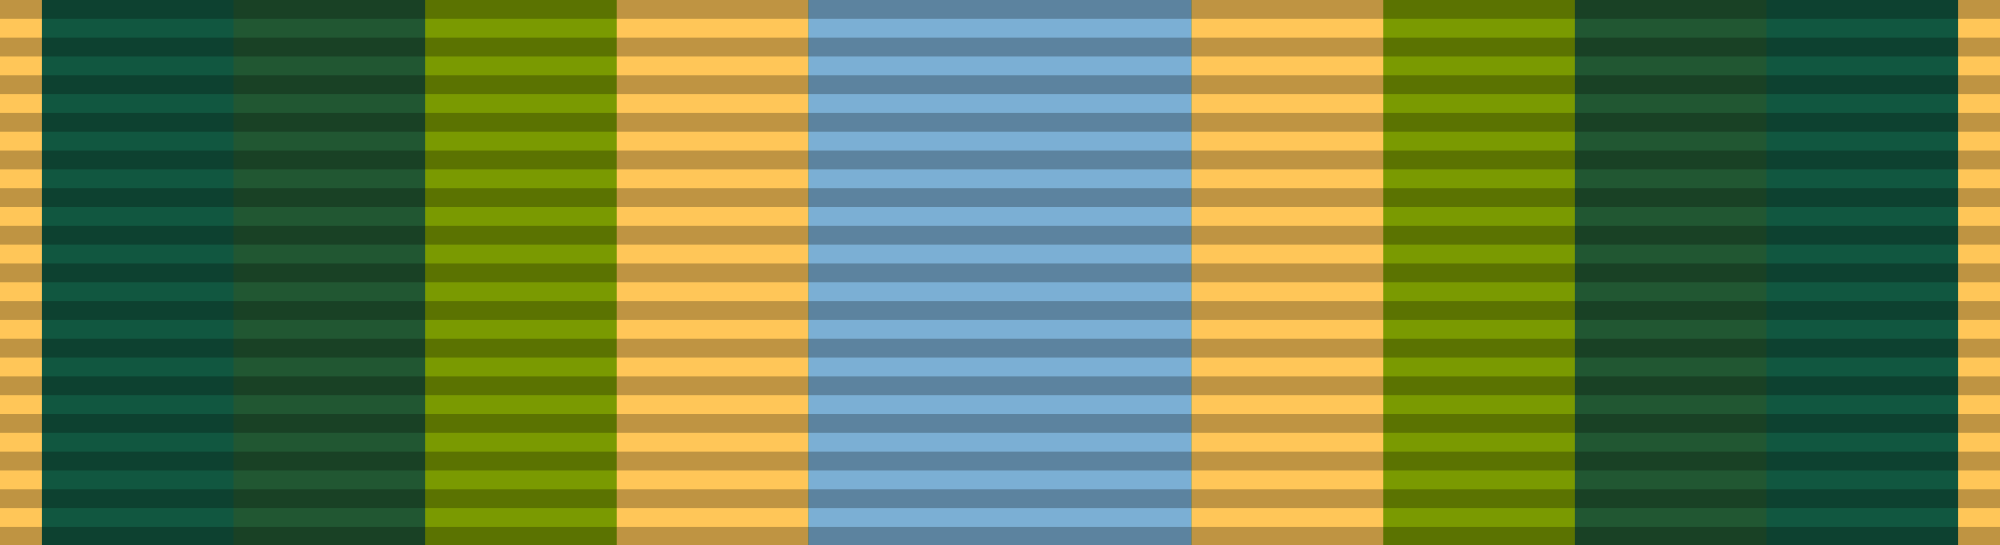 Armed Forces Service Medal.png